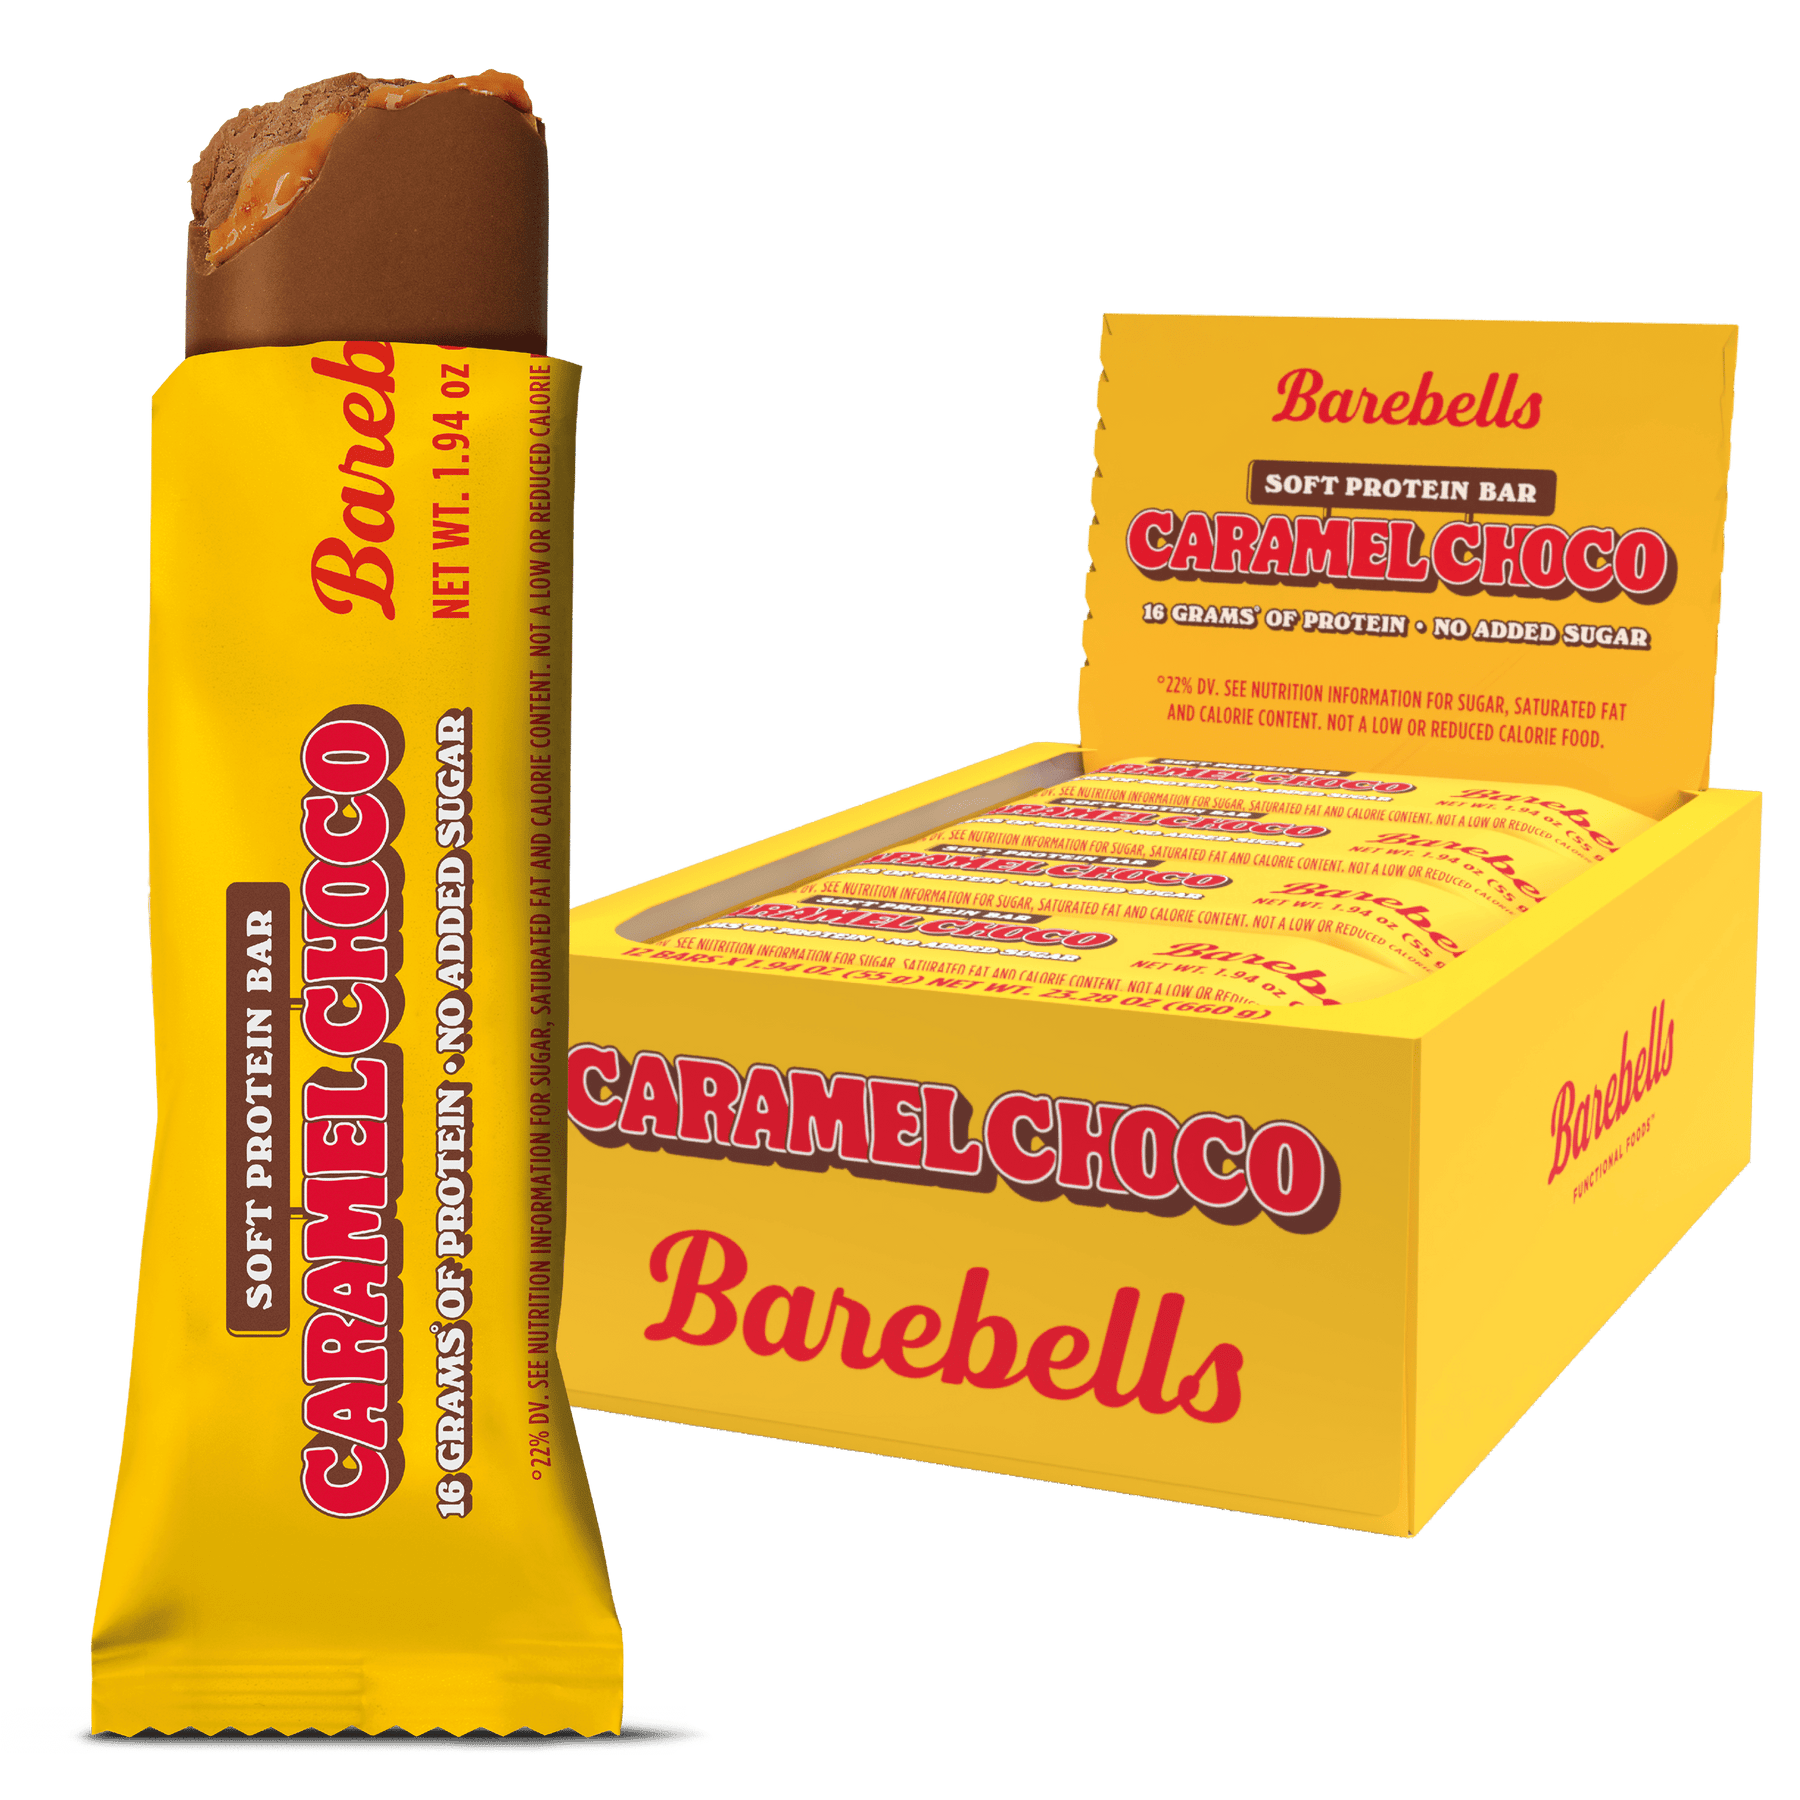 Barebells - Soft Protein Bar - Box 12